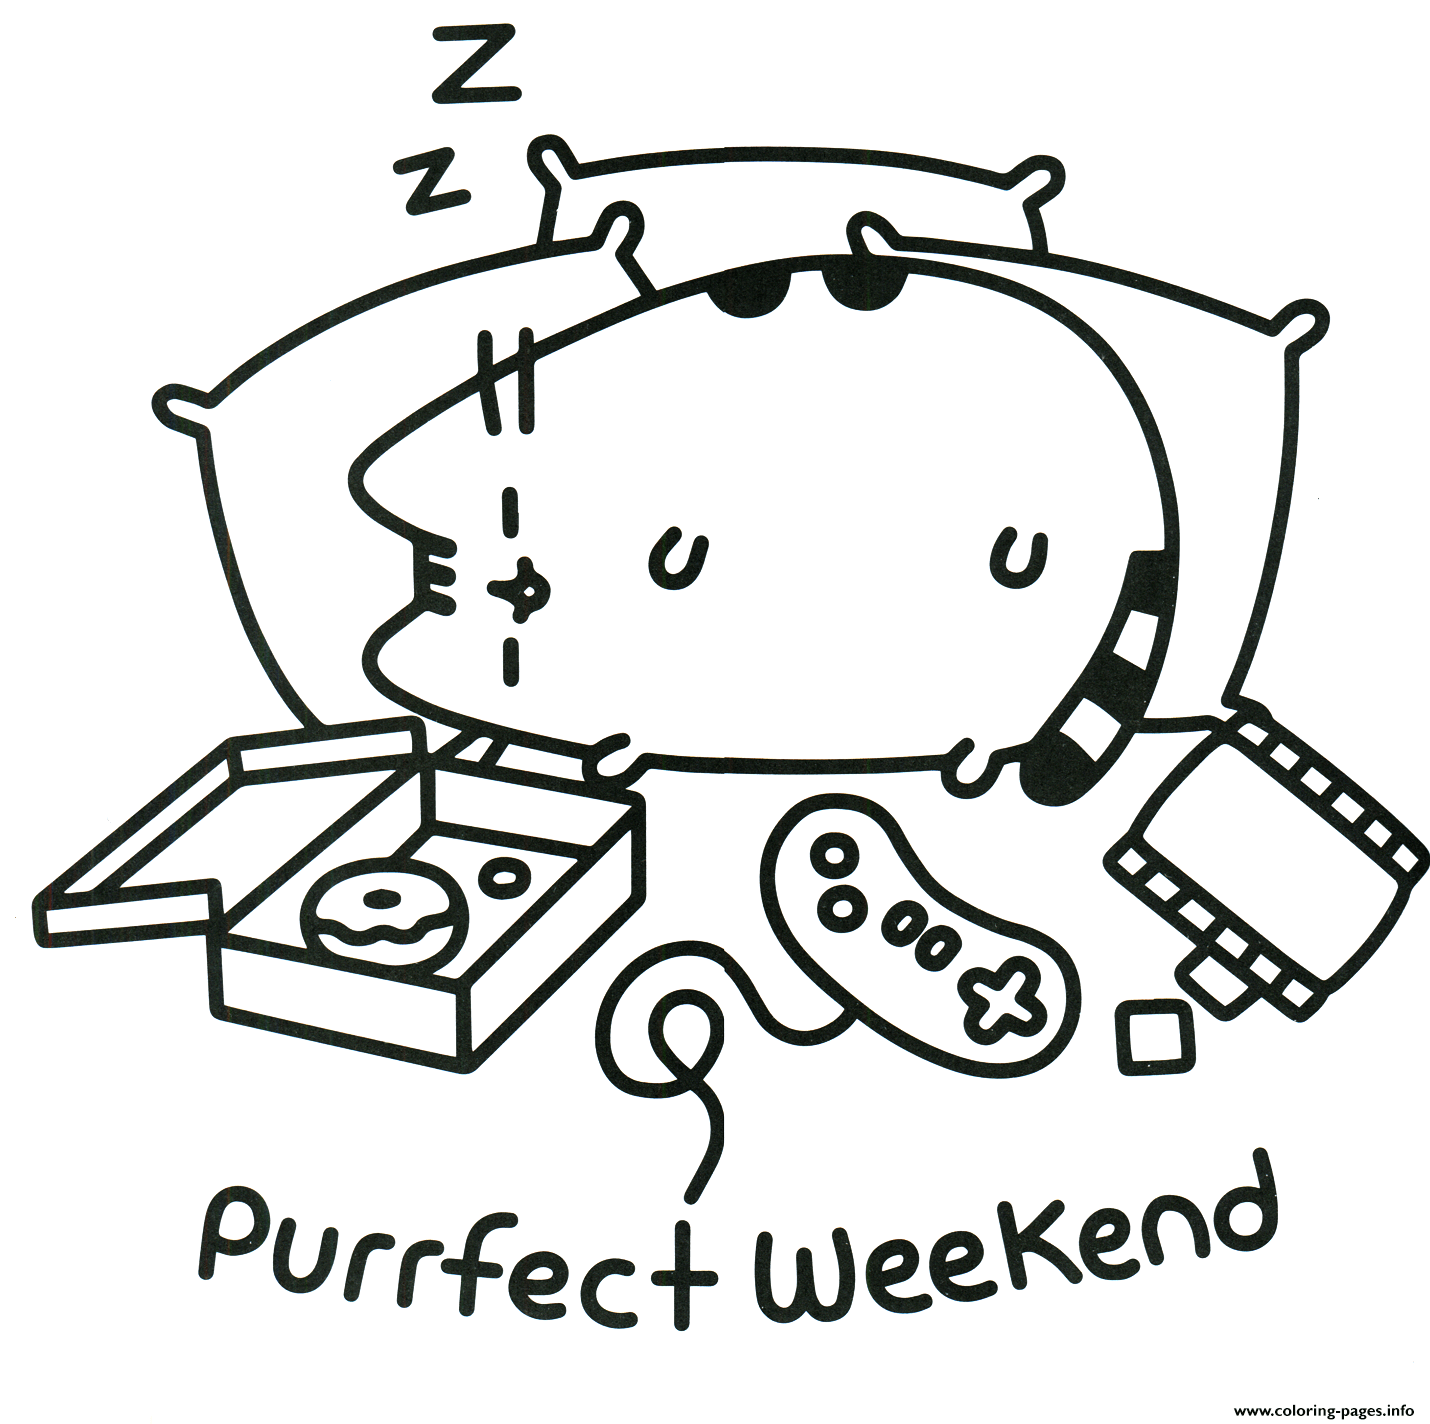 Pusheen Perfect Weekend coloring